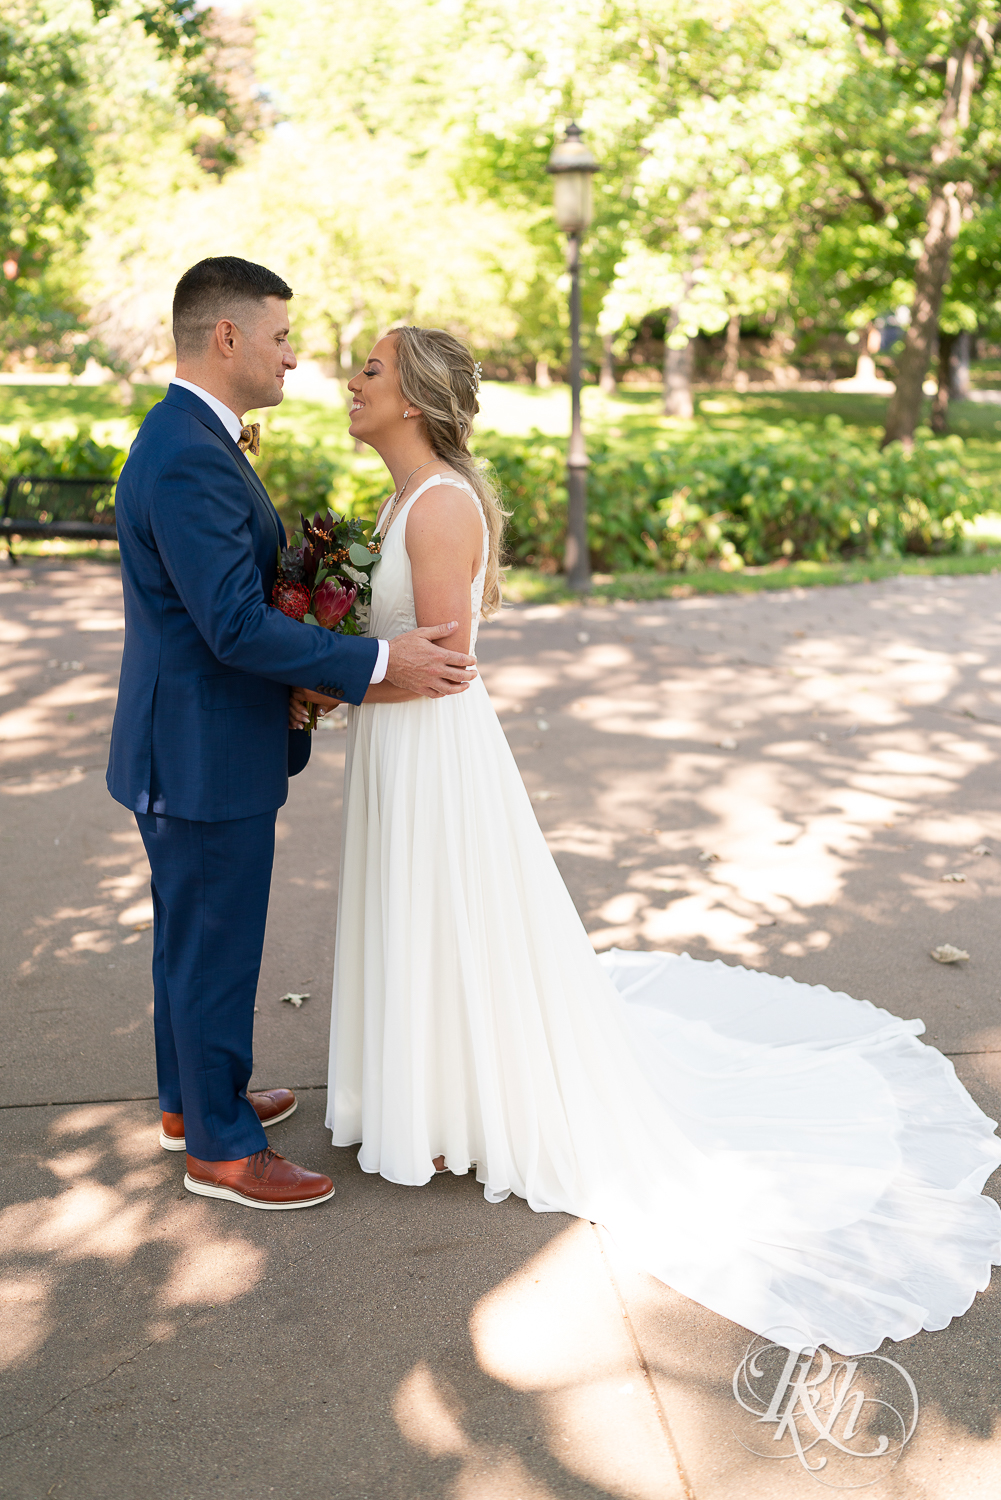 First look between bride and groom at Irvine Park in Saint Paul, Minnesota.